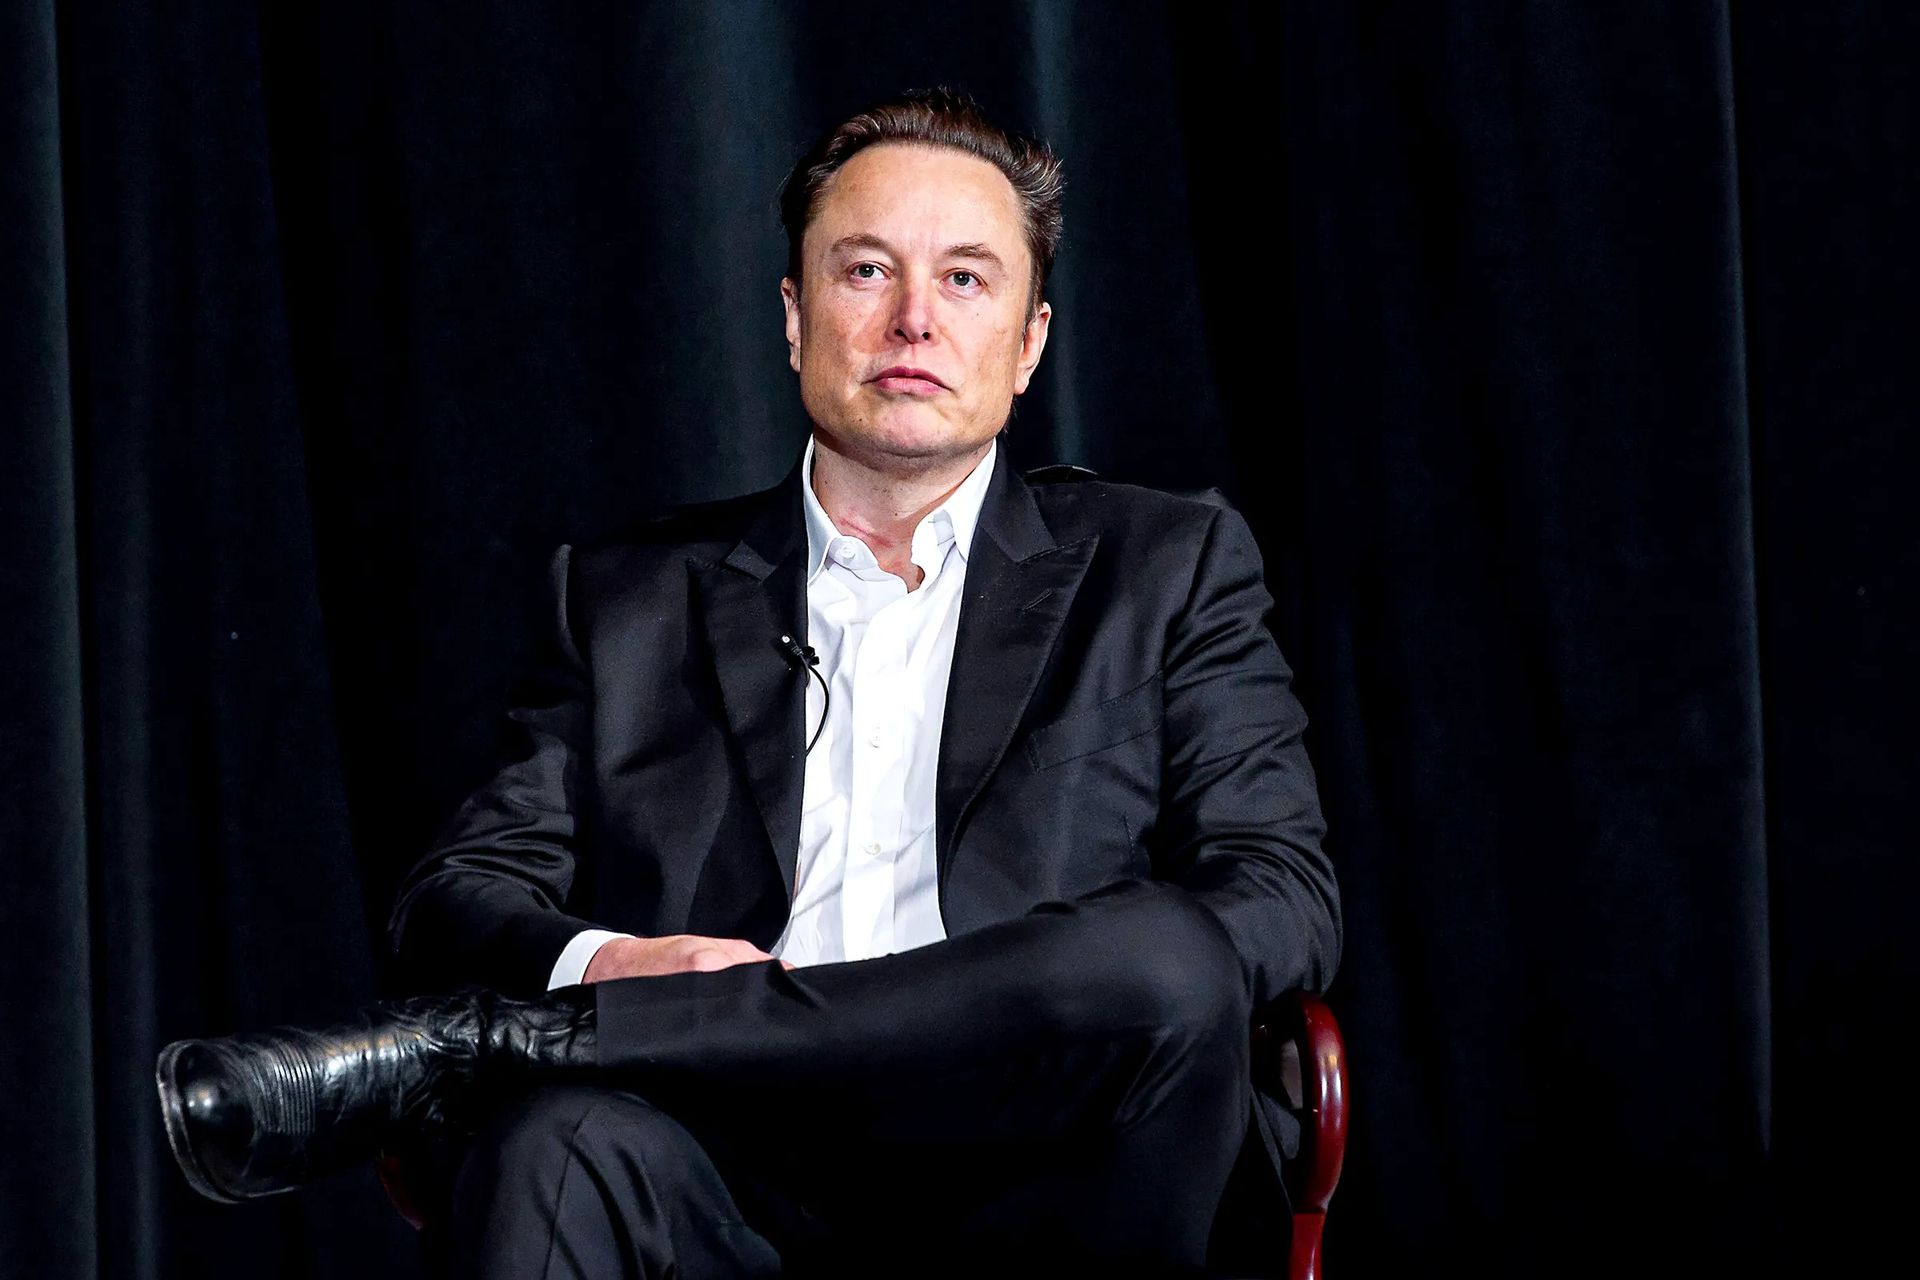 How tall is Elon Musk?